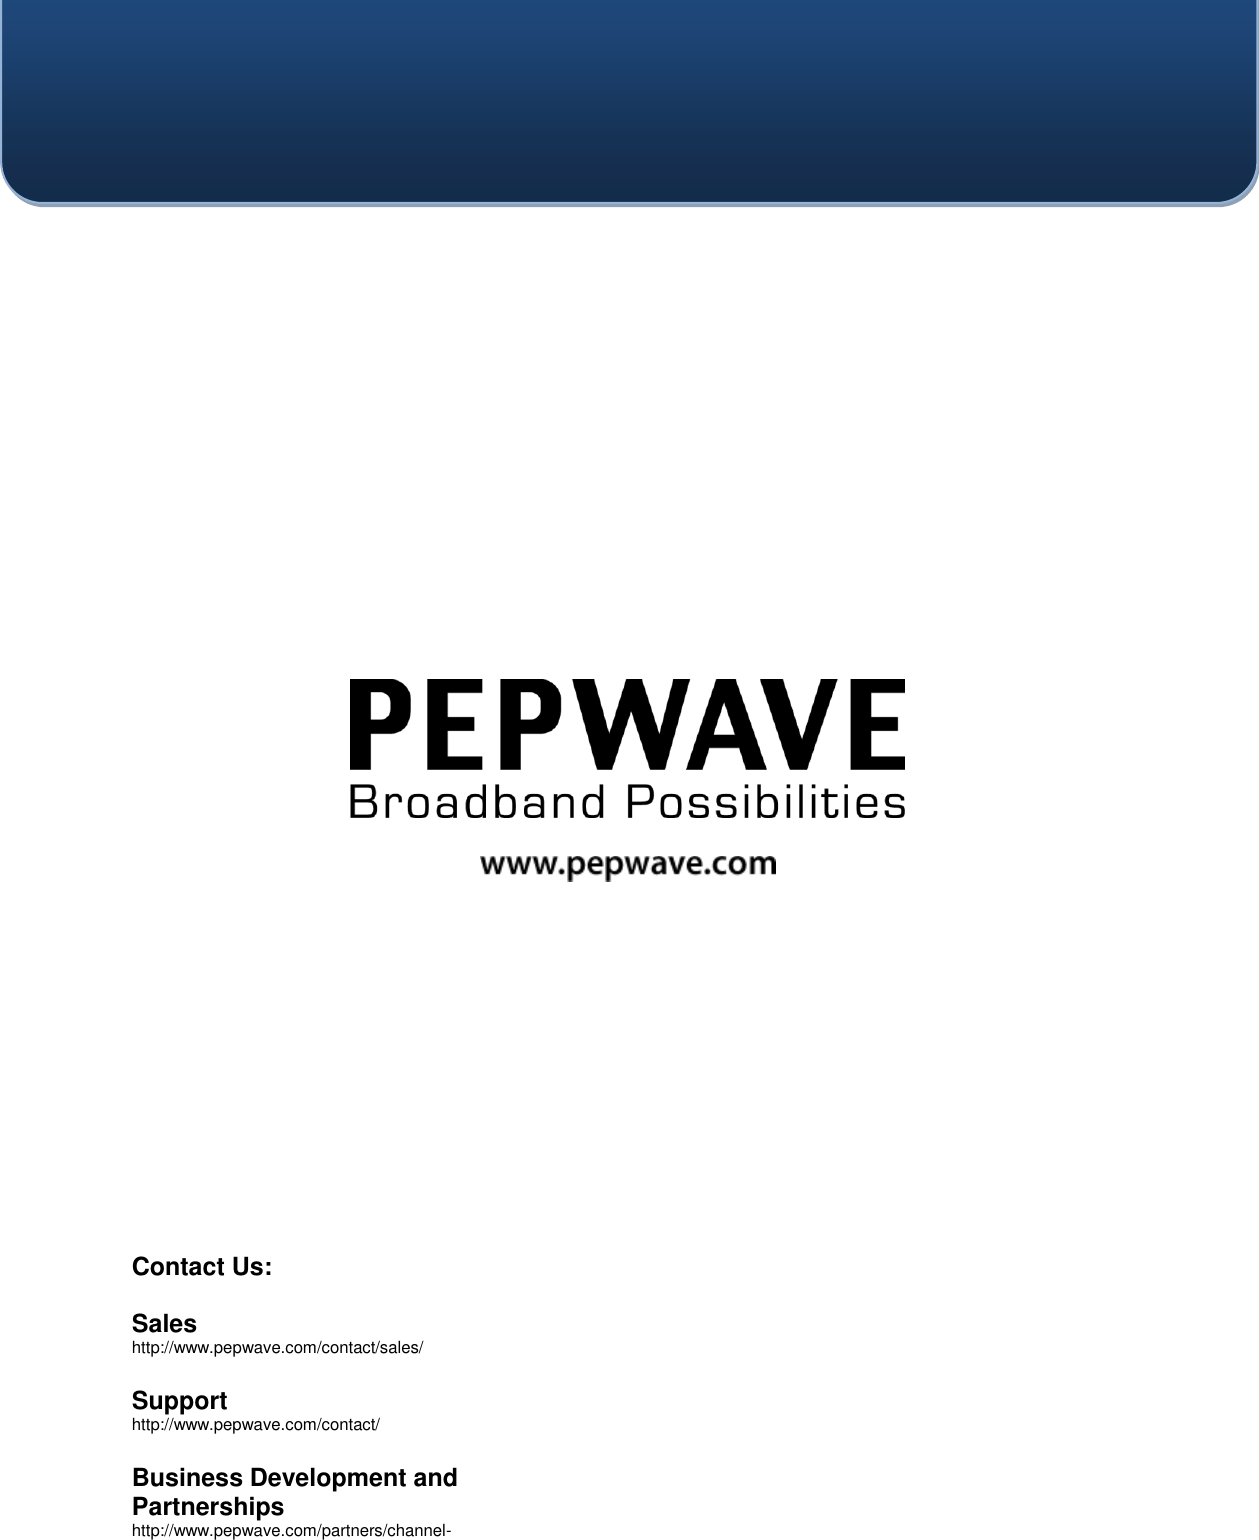    Contact Us:  Sales http://www.pepwave.com/contact/sales/  Support http://www.pepwave.com/contact/  Business Development and Partnerships http://www.pepwave.com/partners/channel-partner-program/  